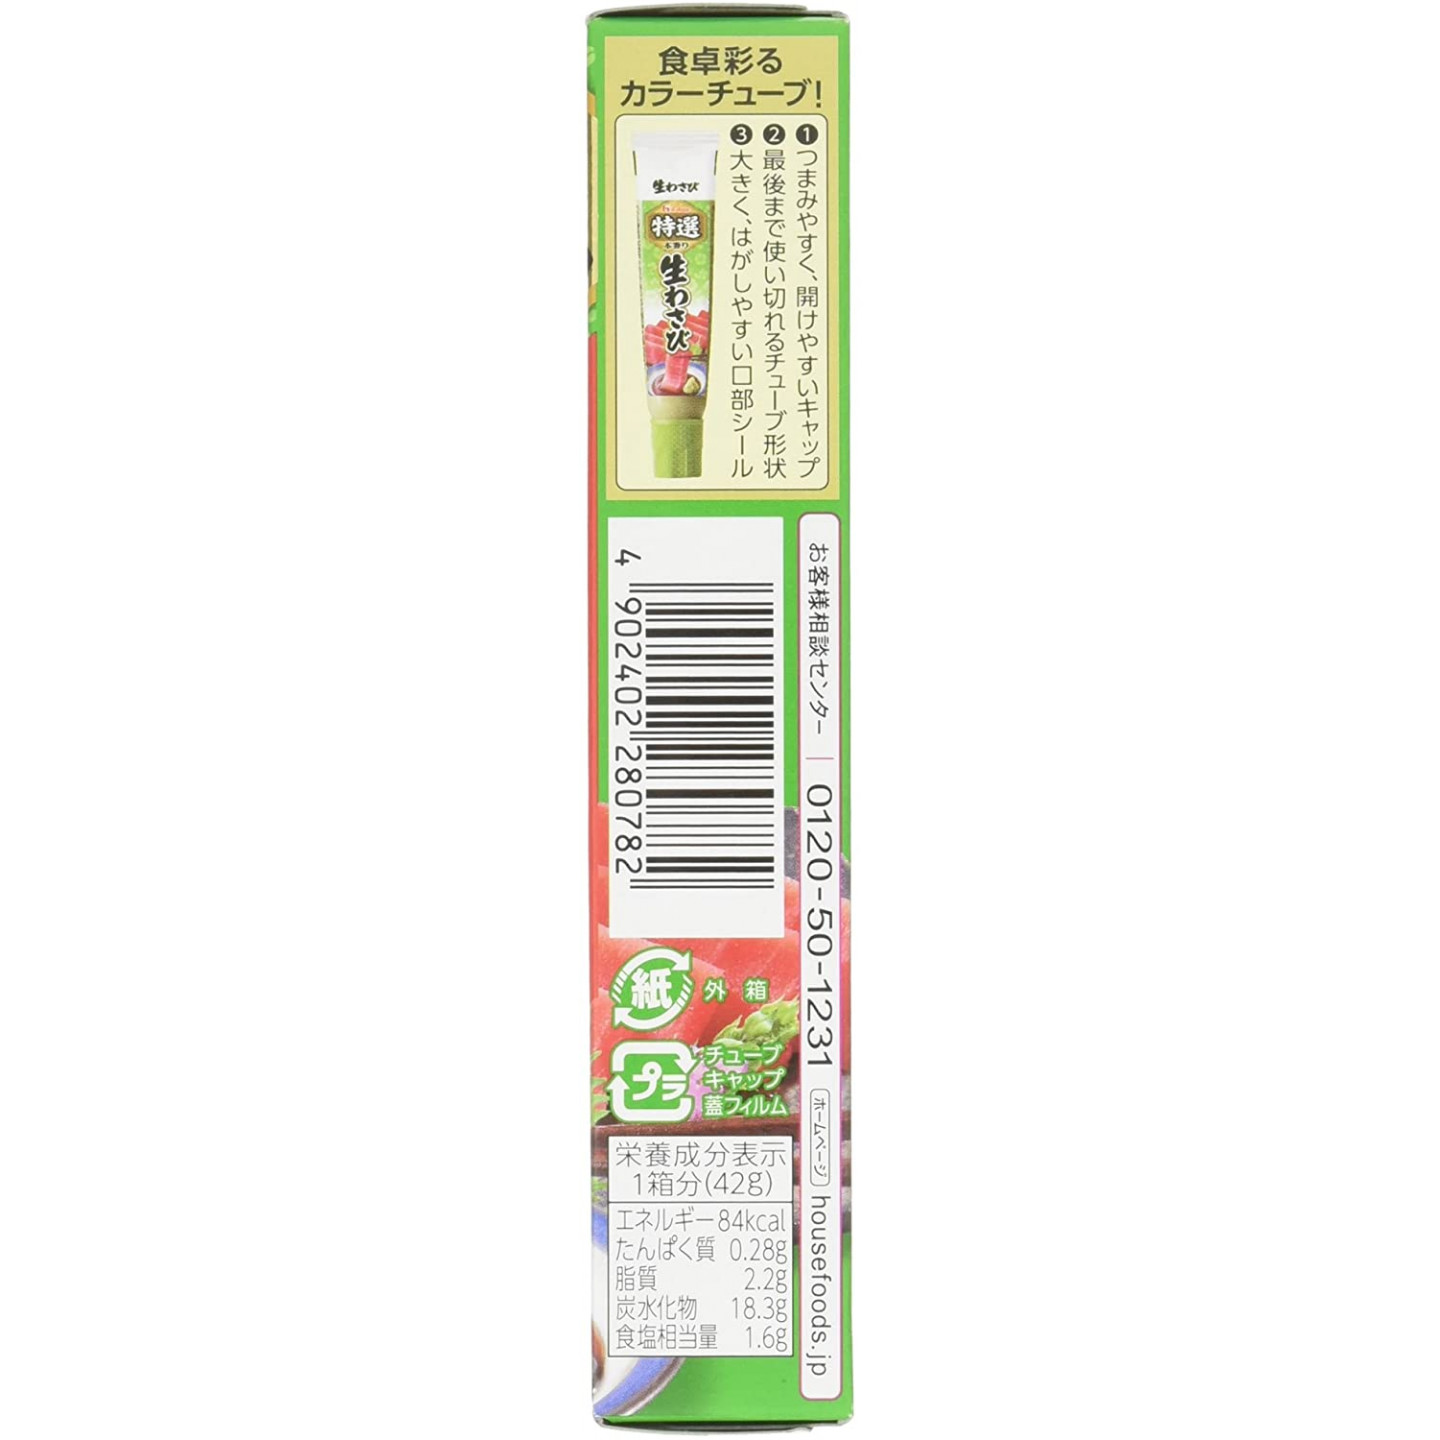 HOUSE FOODS - Wasabi premium 42g